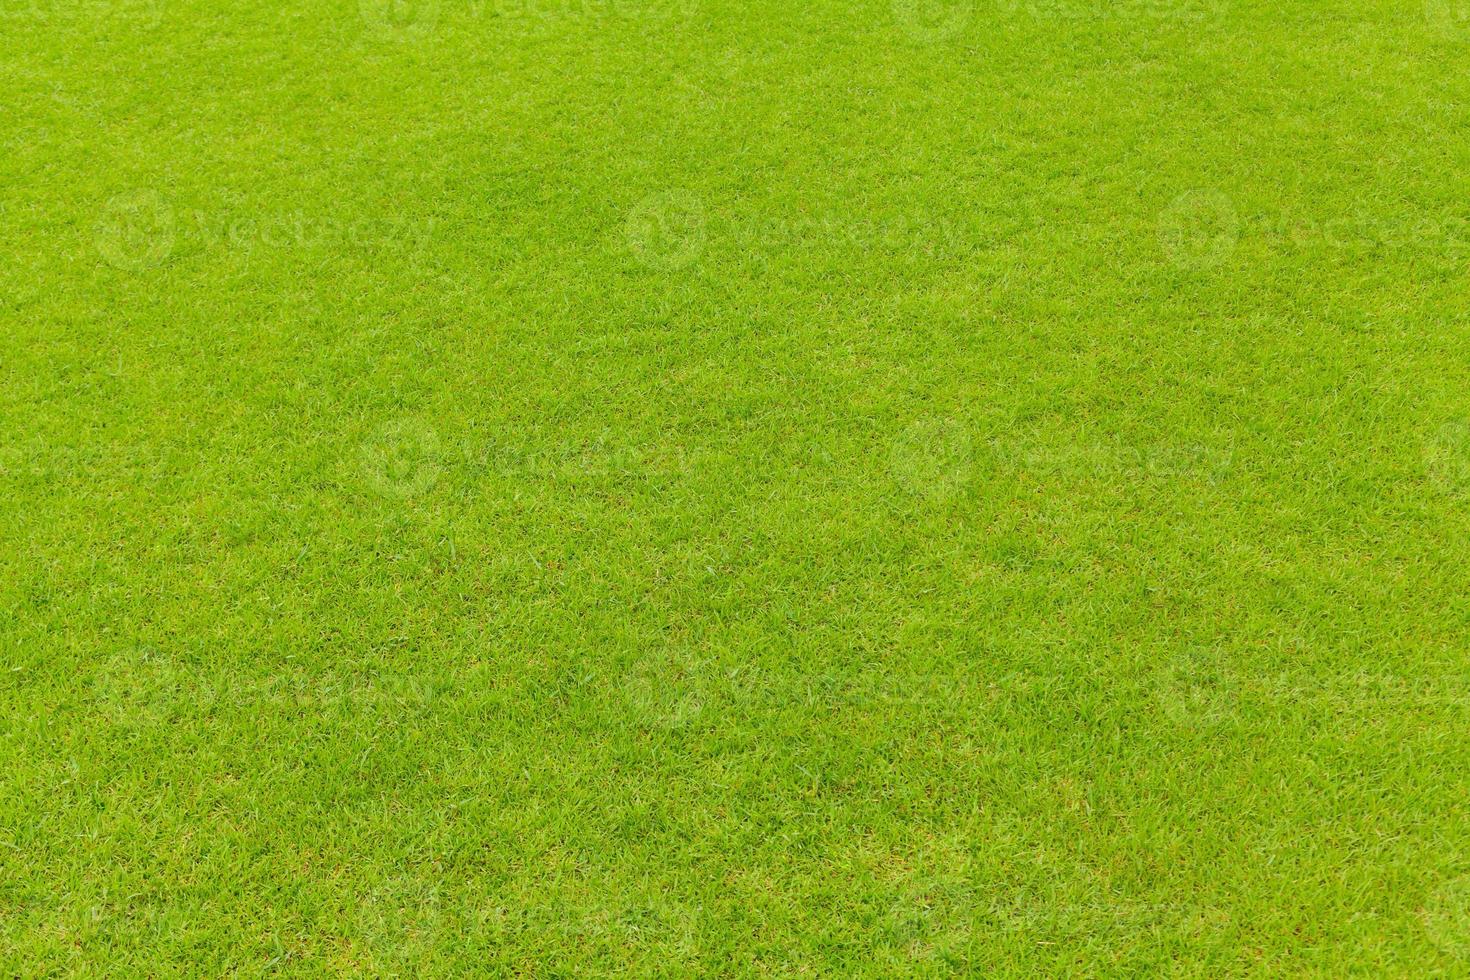 Green grass texture background photo